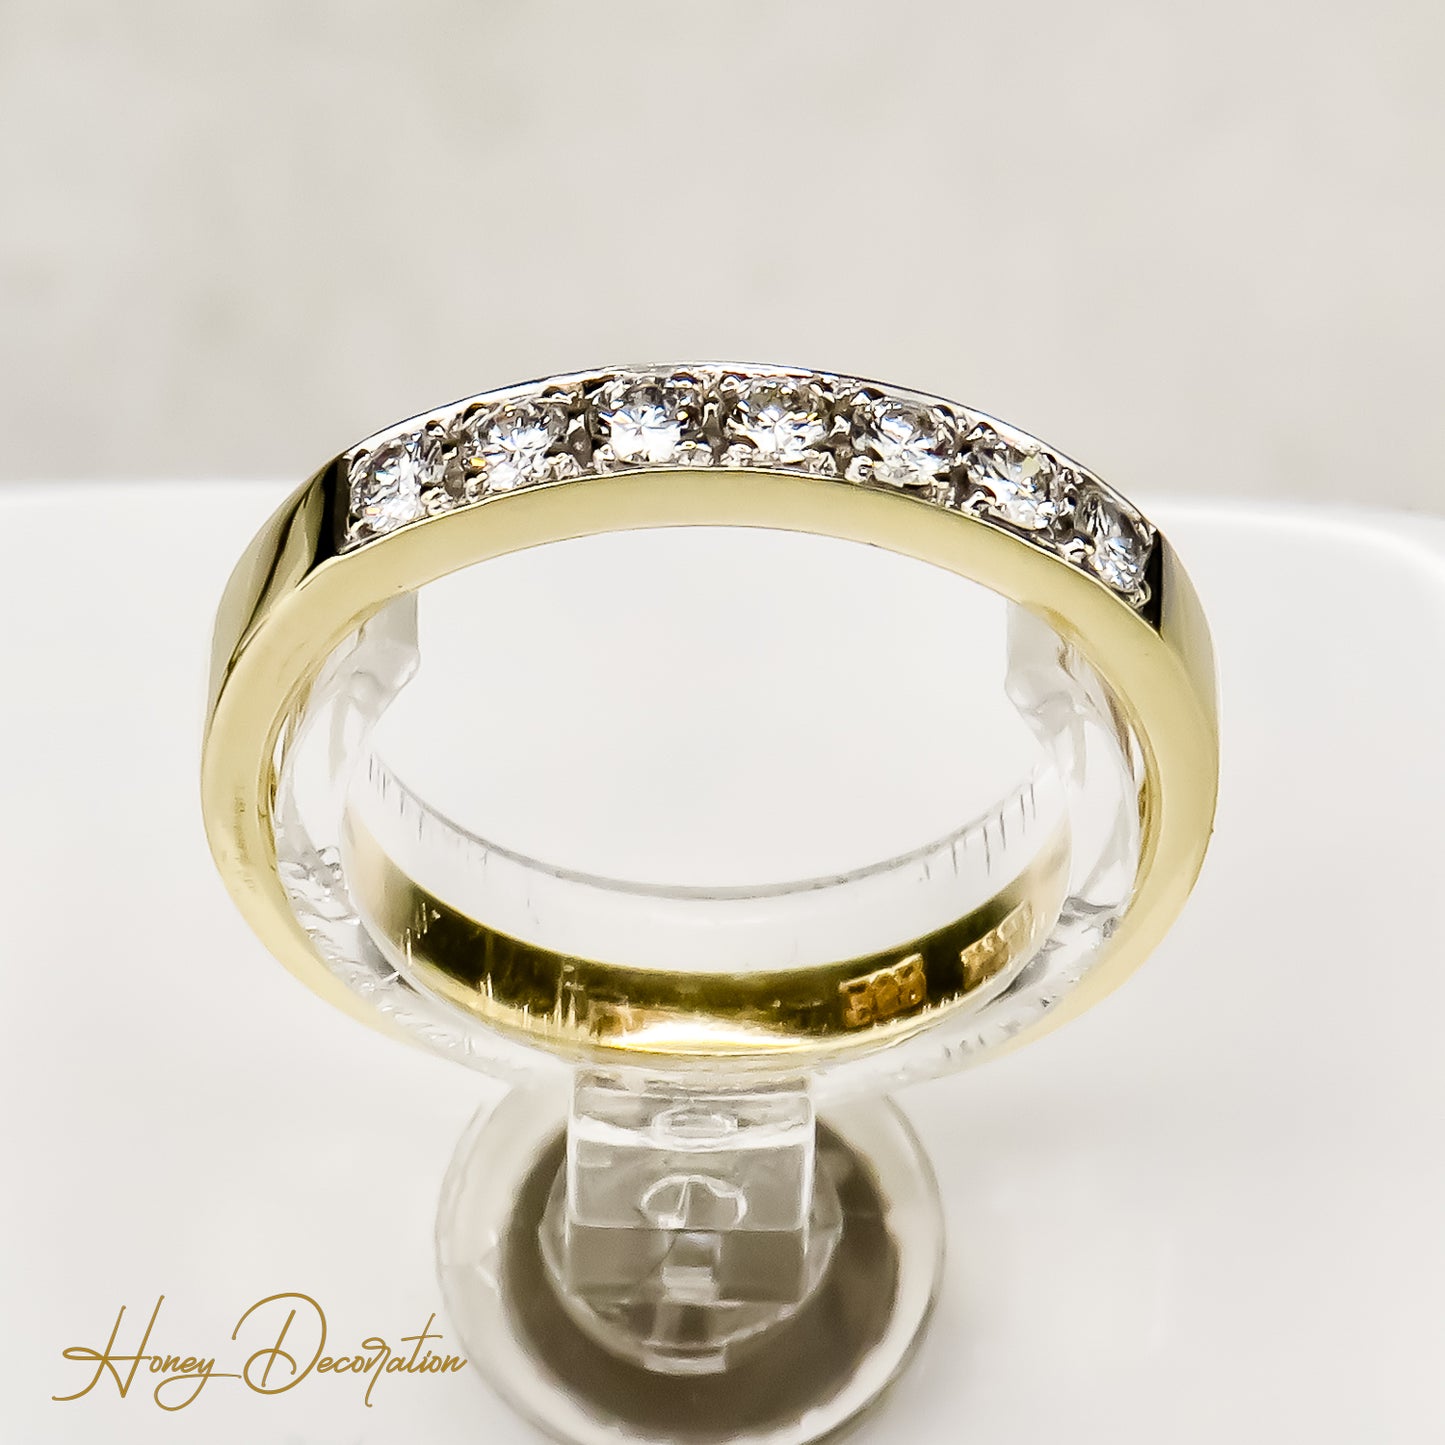 Classic memory diamond ring made of 14 karat gold